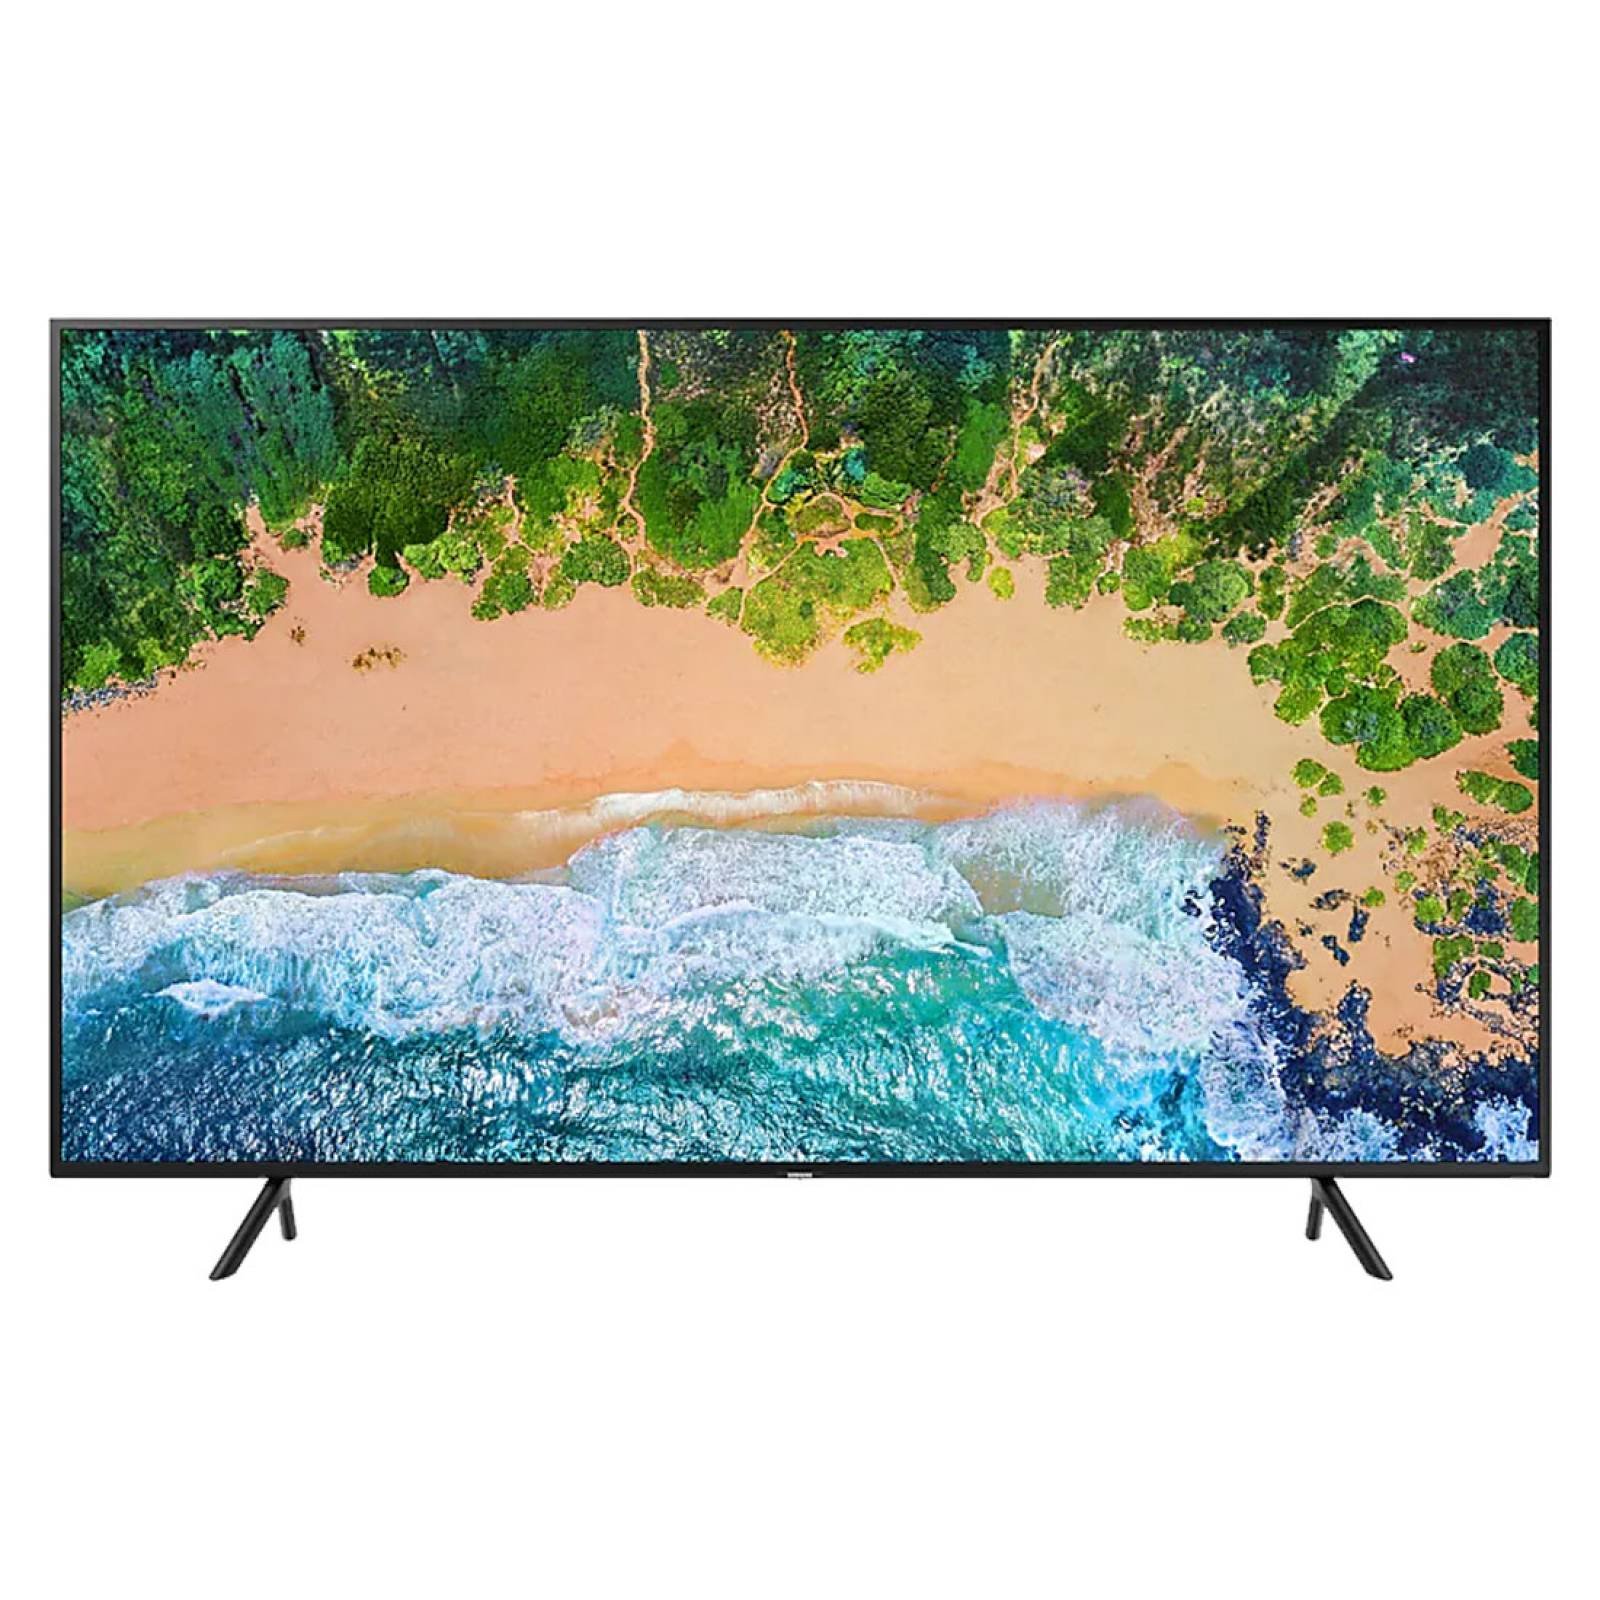 Smart TV Pantalla Led 4K 58 pulg 120 Hz Serie 7 HDR Samsung